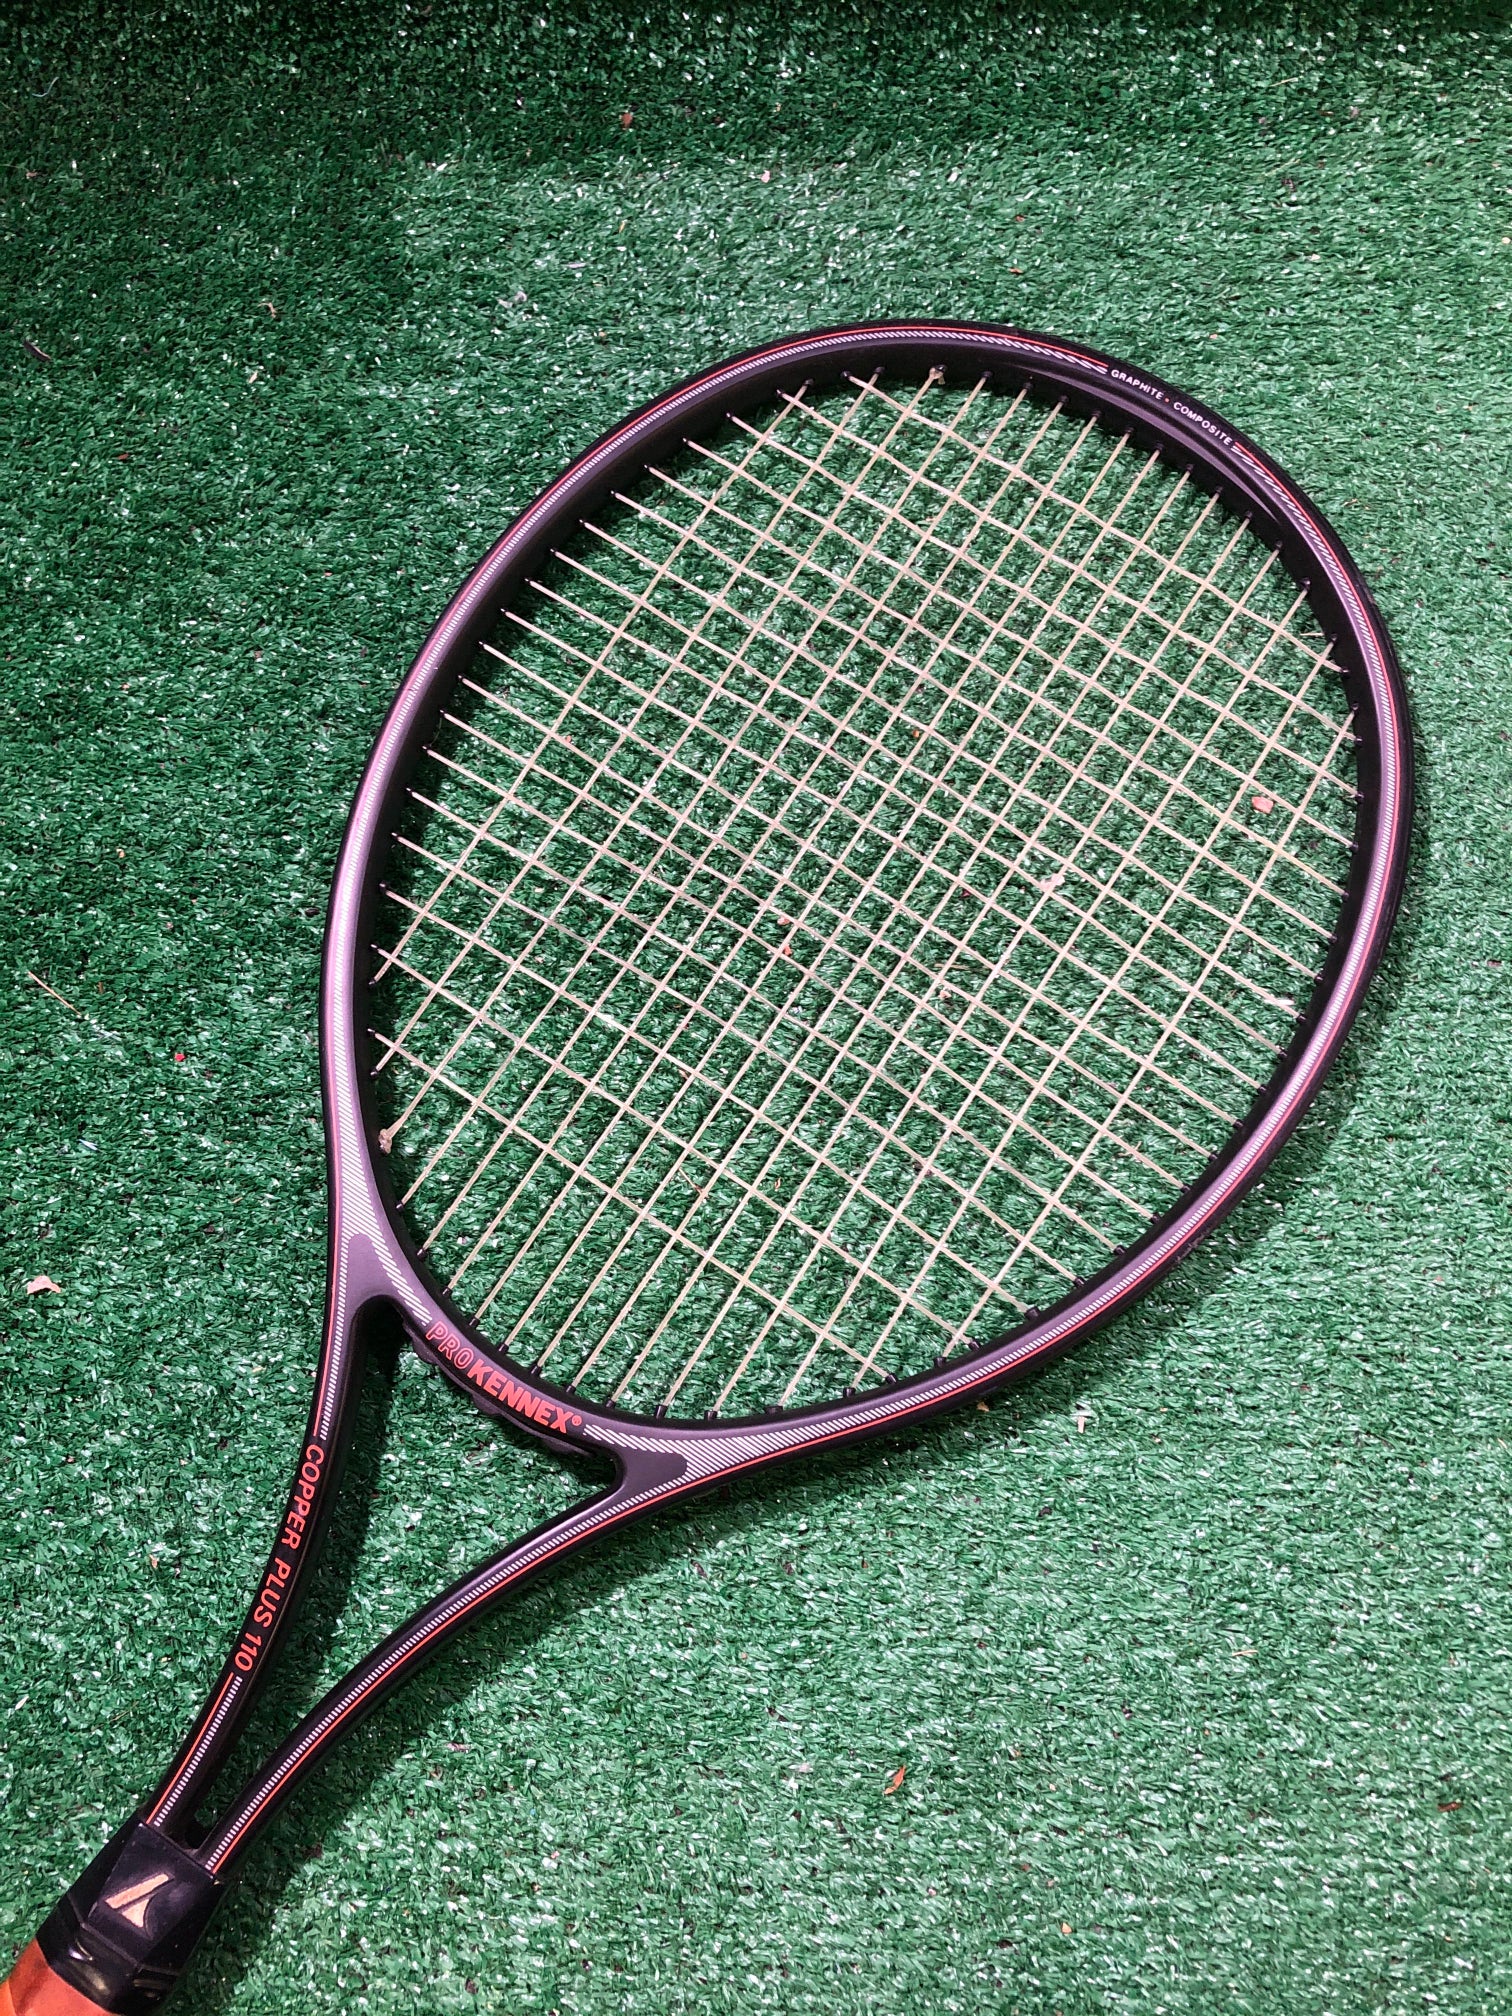 Prokennex Copper Plus 110 Tennis Racket, 27", 4 3/8"